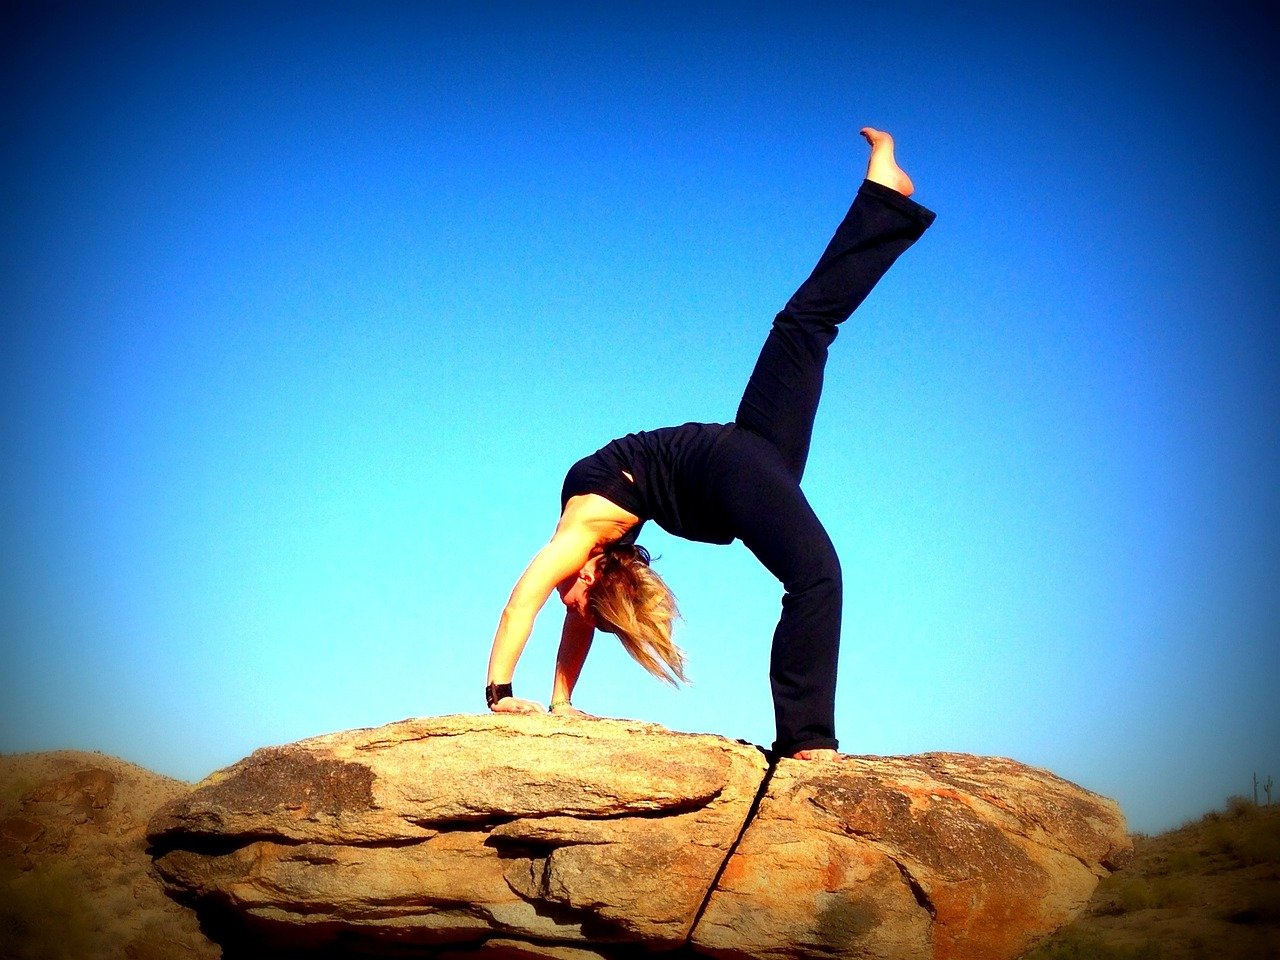 Can Yoga Practice Improve Flexibility And Balance?